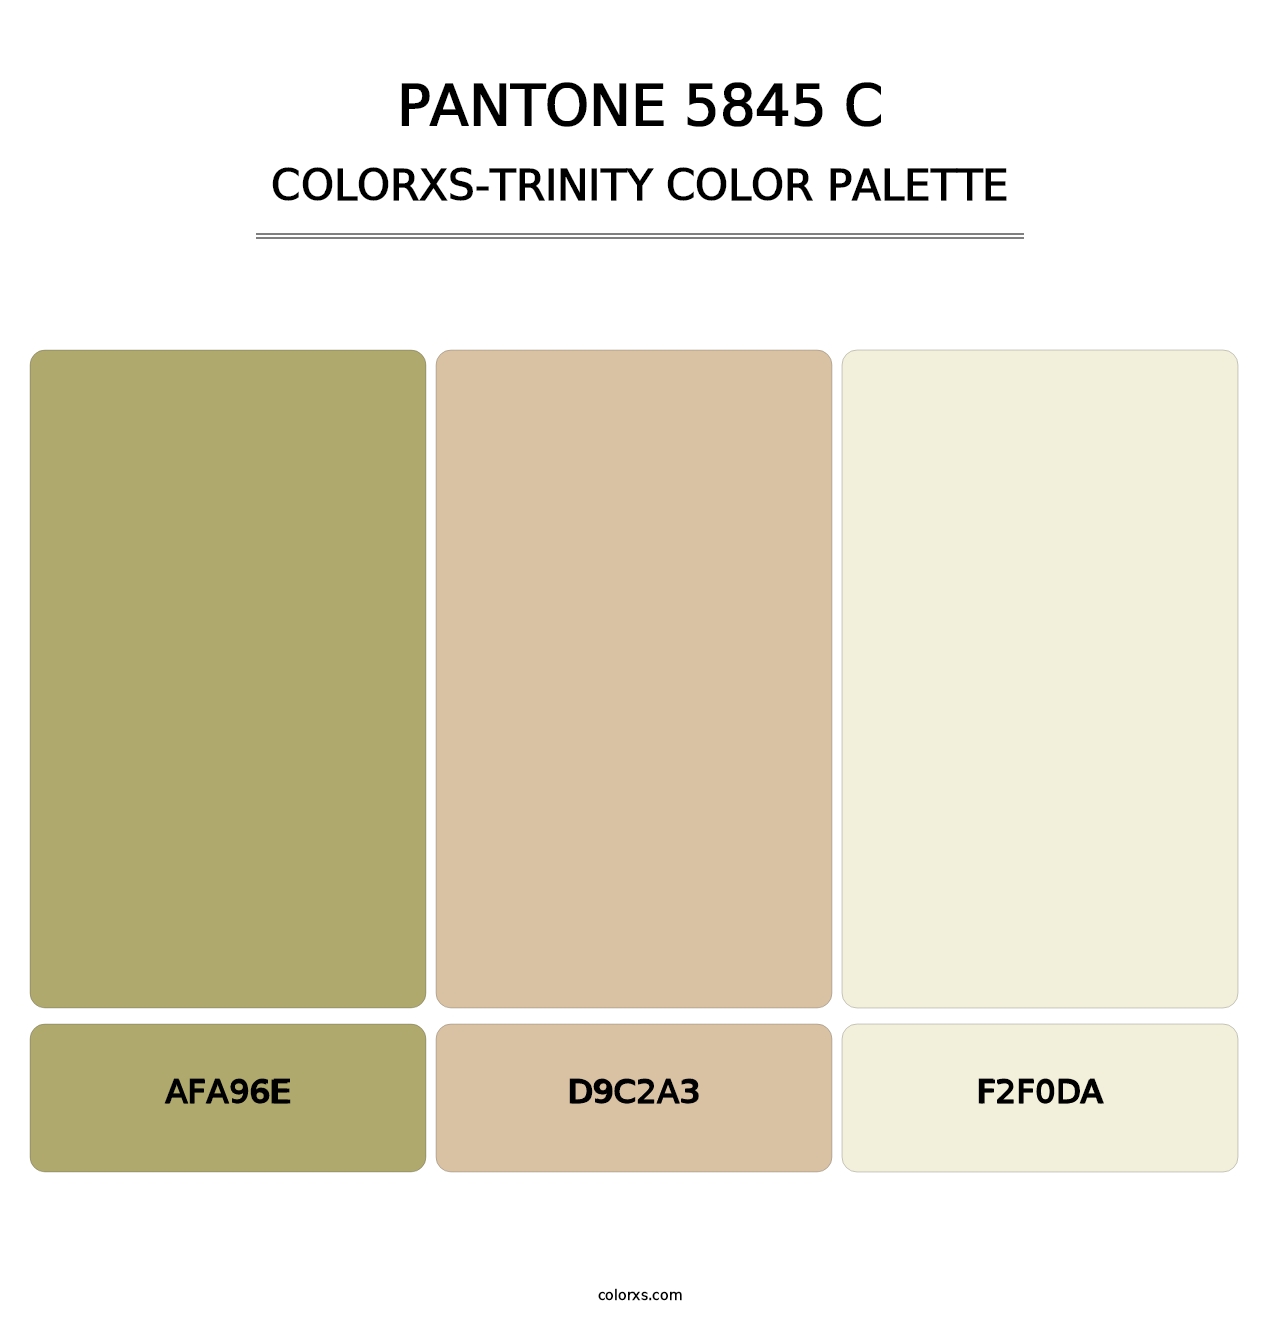 PANTONE 5845 C - Colorxs Trinity Palette